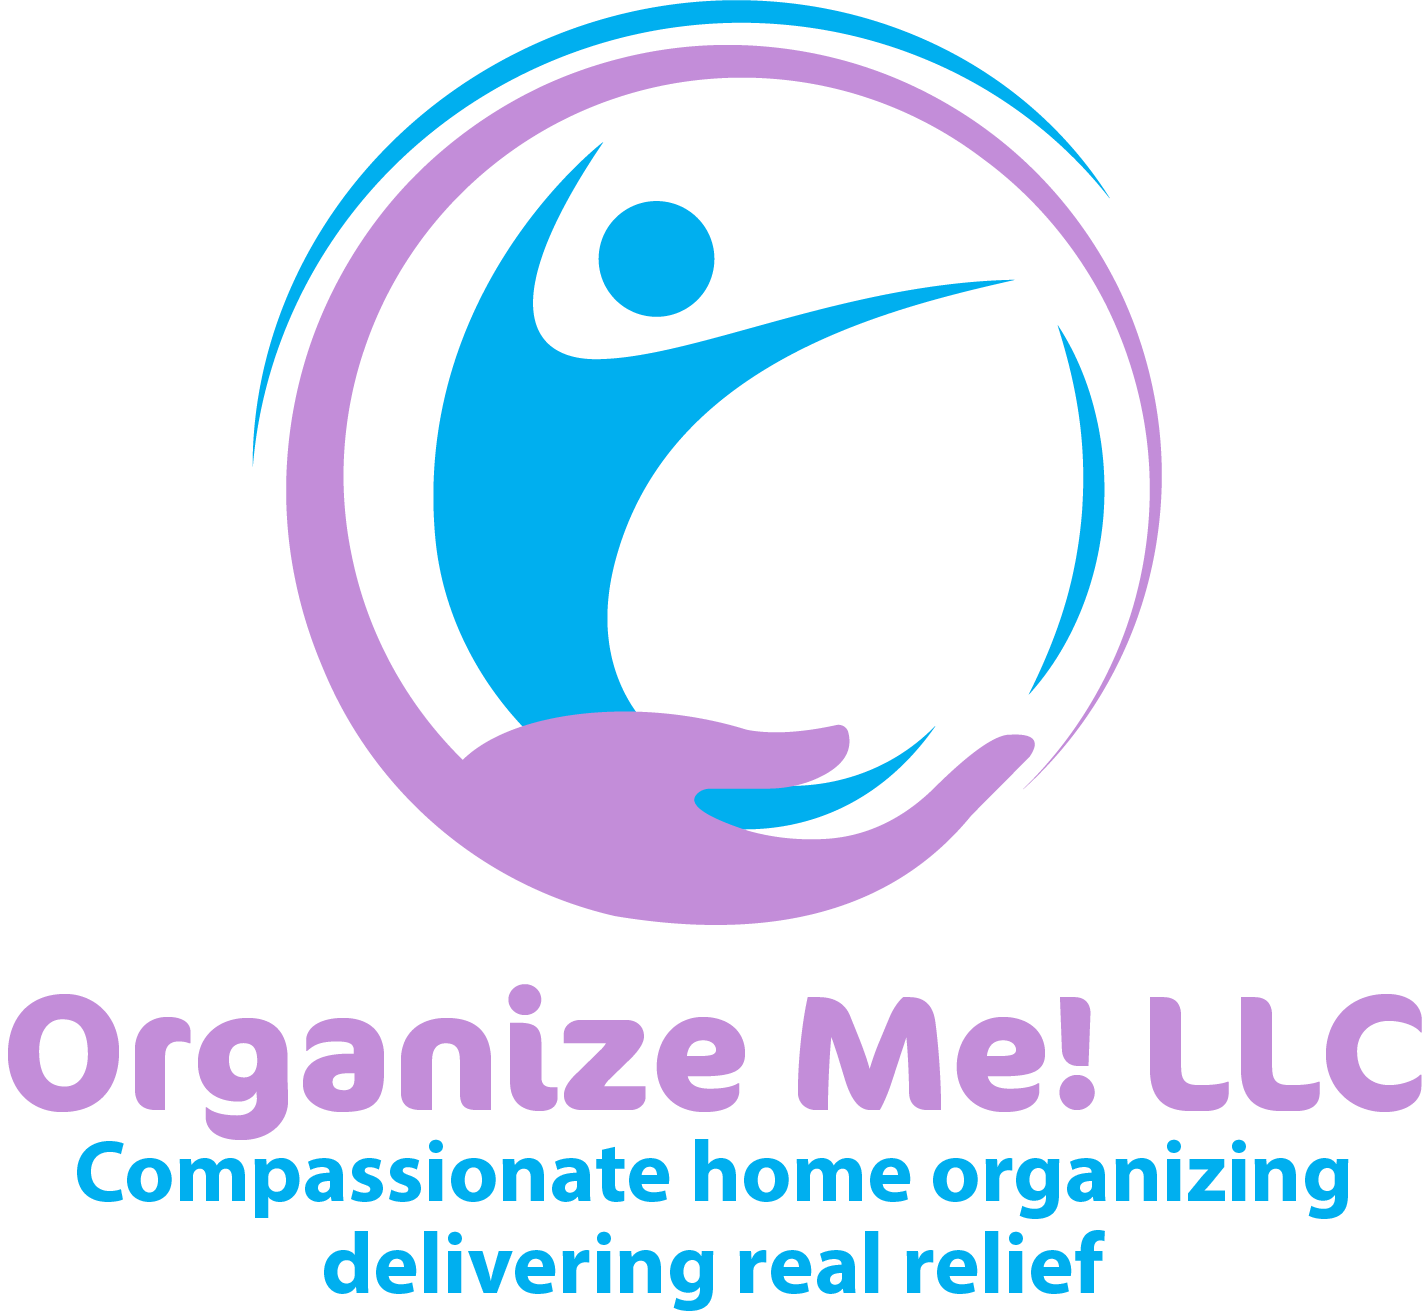 Organize Me! LLC